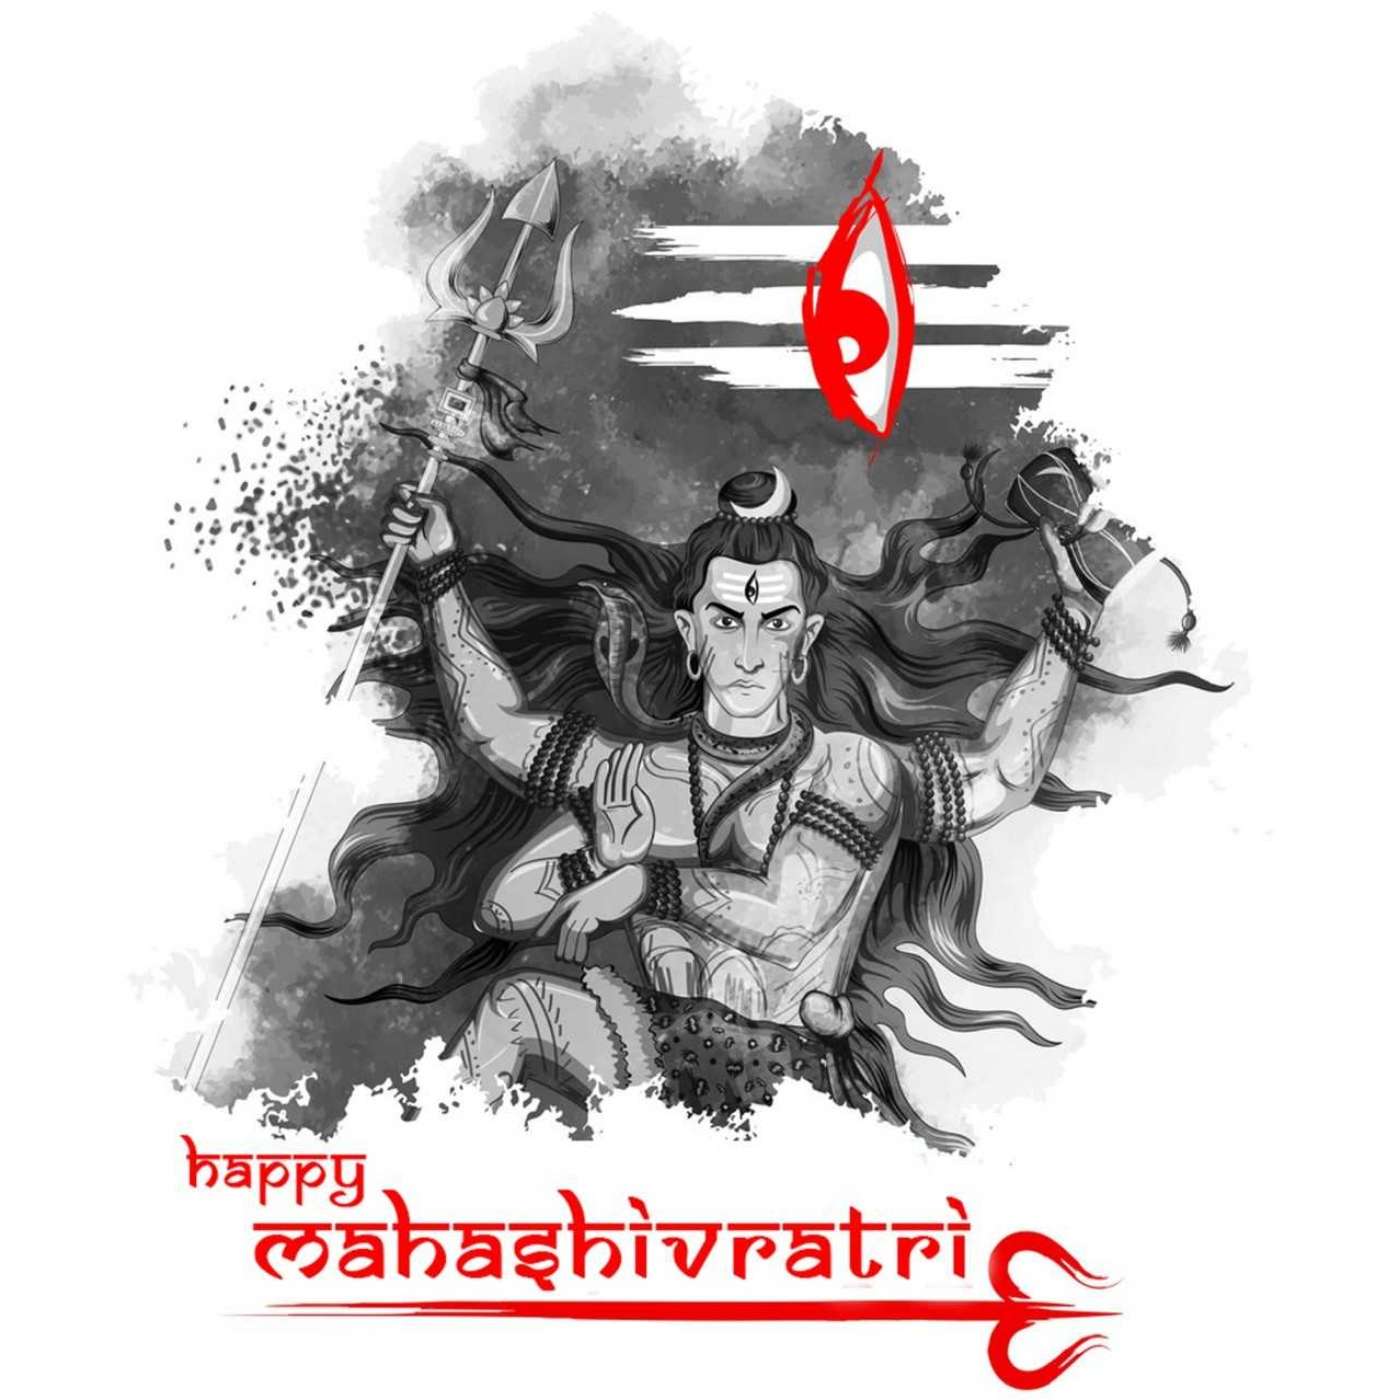 Mahashivratri Ki Photo Download